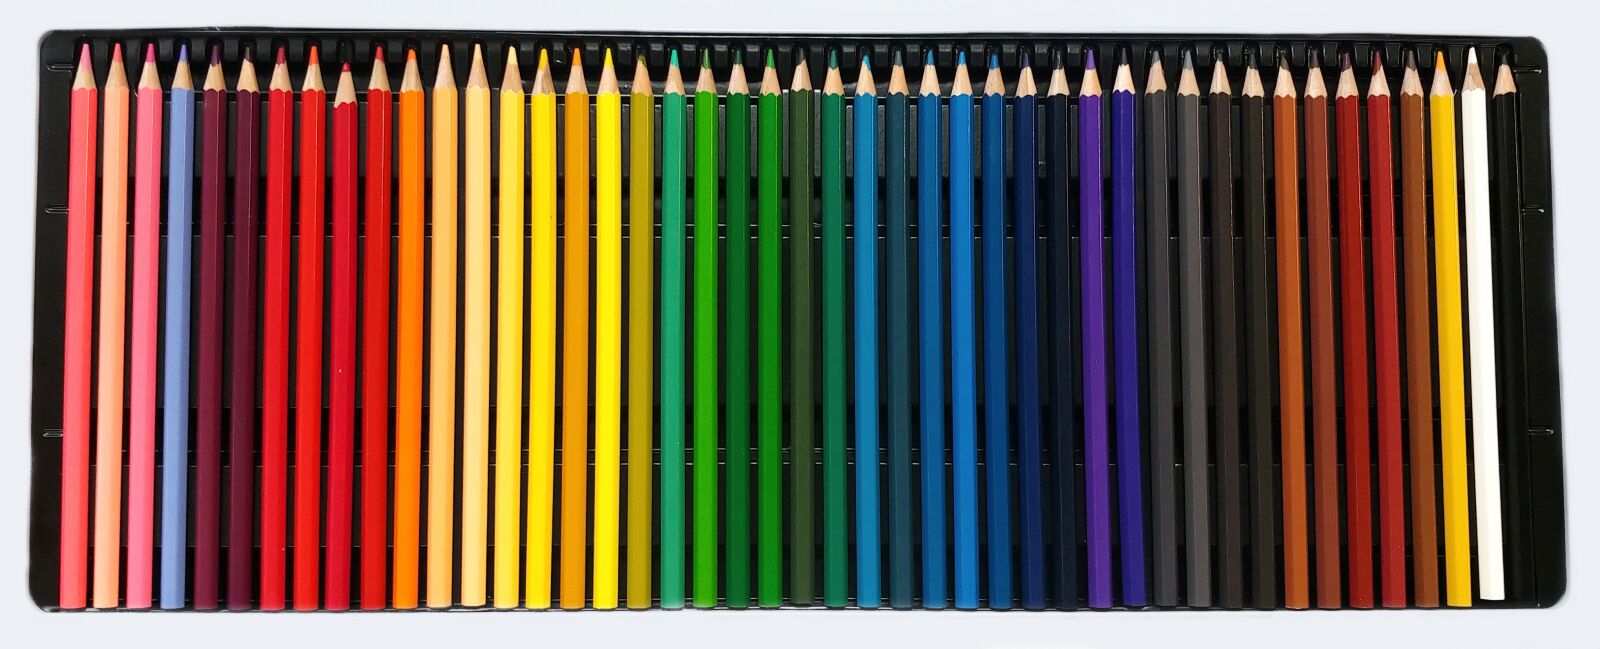 LG V30 sample photo. Colors, pencils, color photography